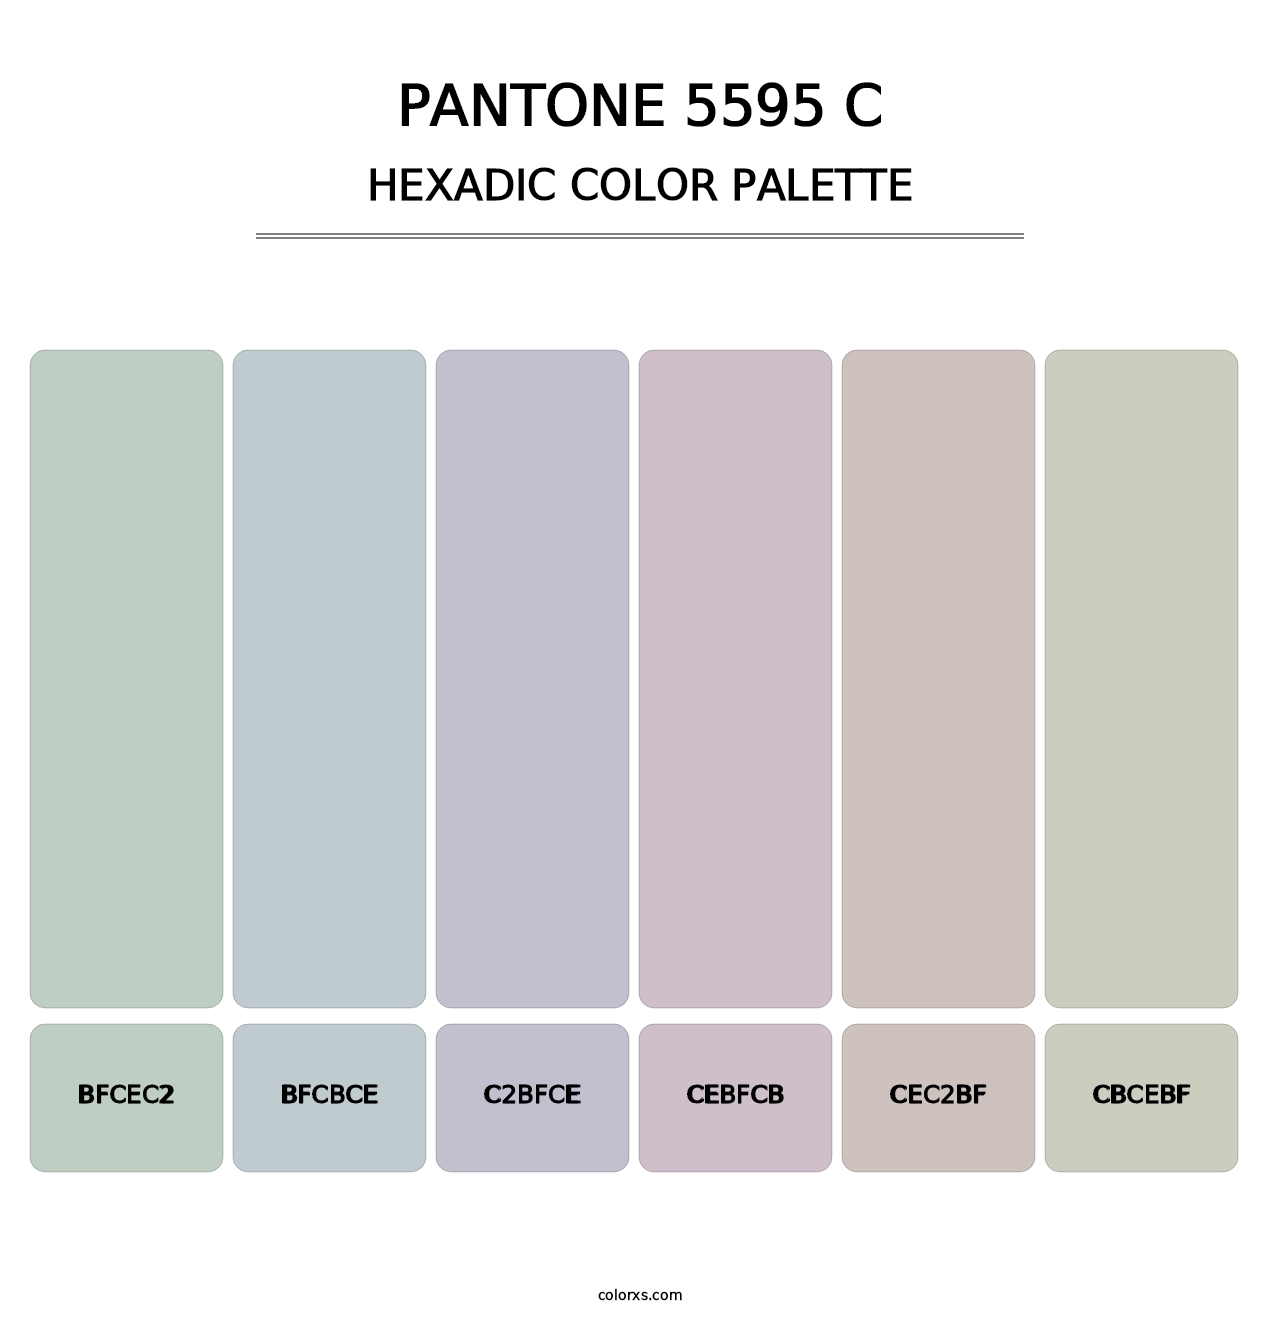 PANTONE 5595 C - Hexadic Color Palette